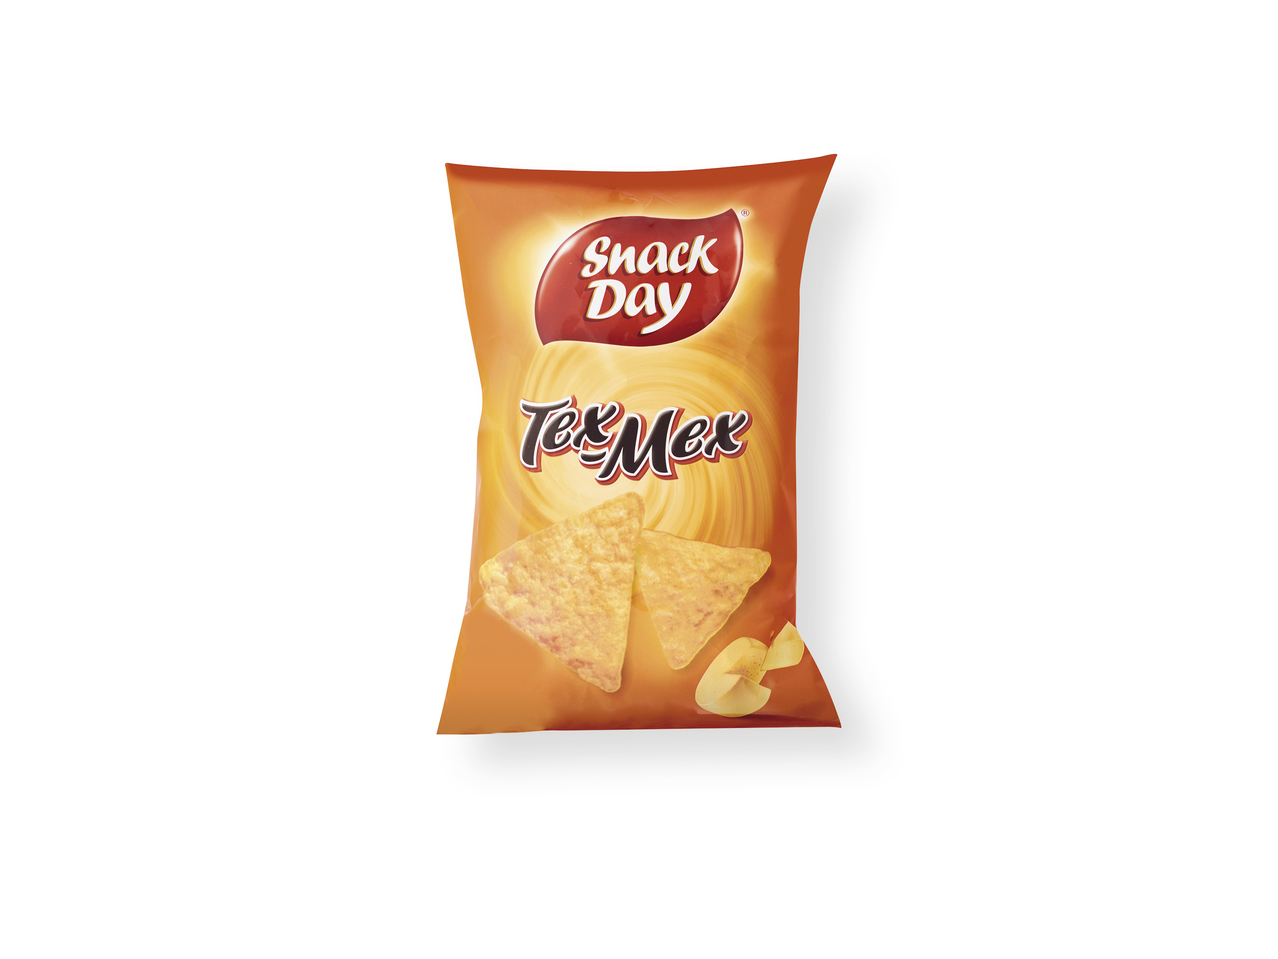 ‘Snack day (R)' Tortilla Tex-mex